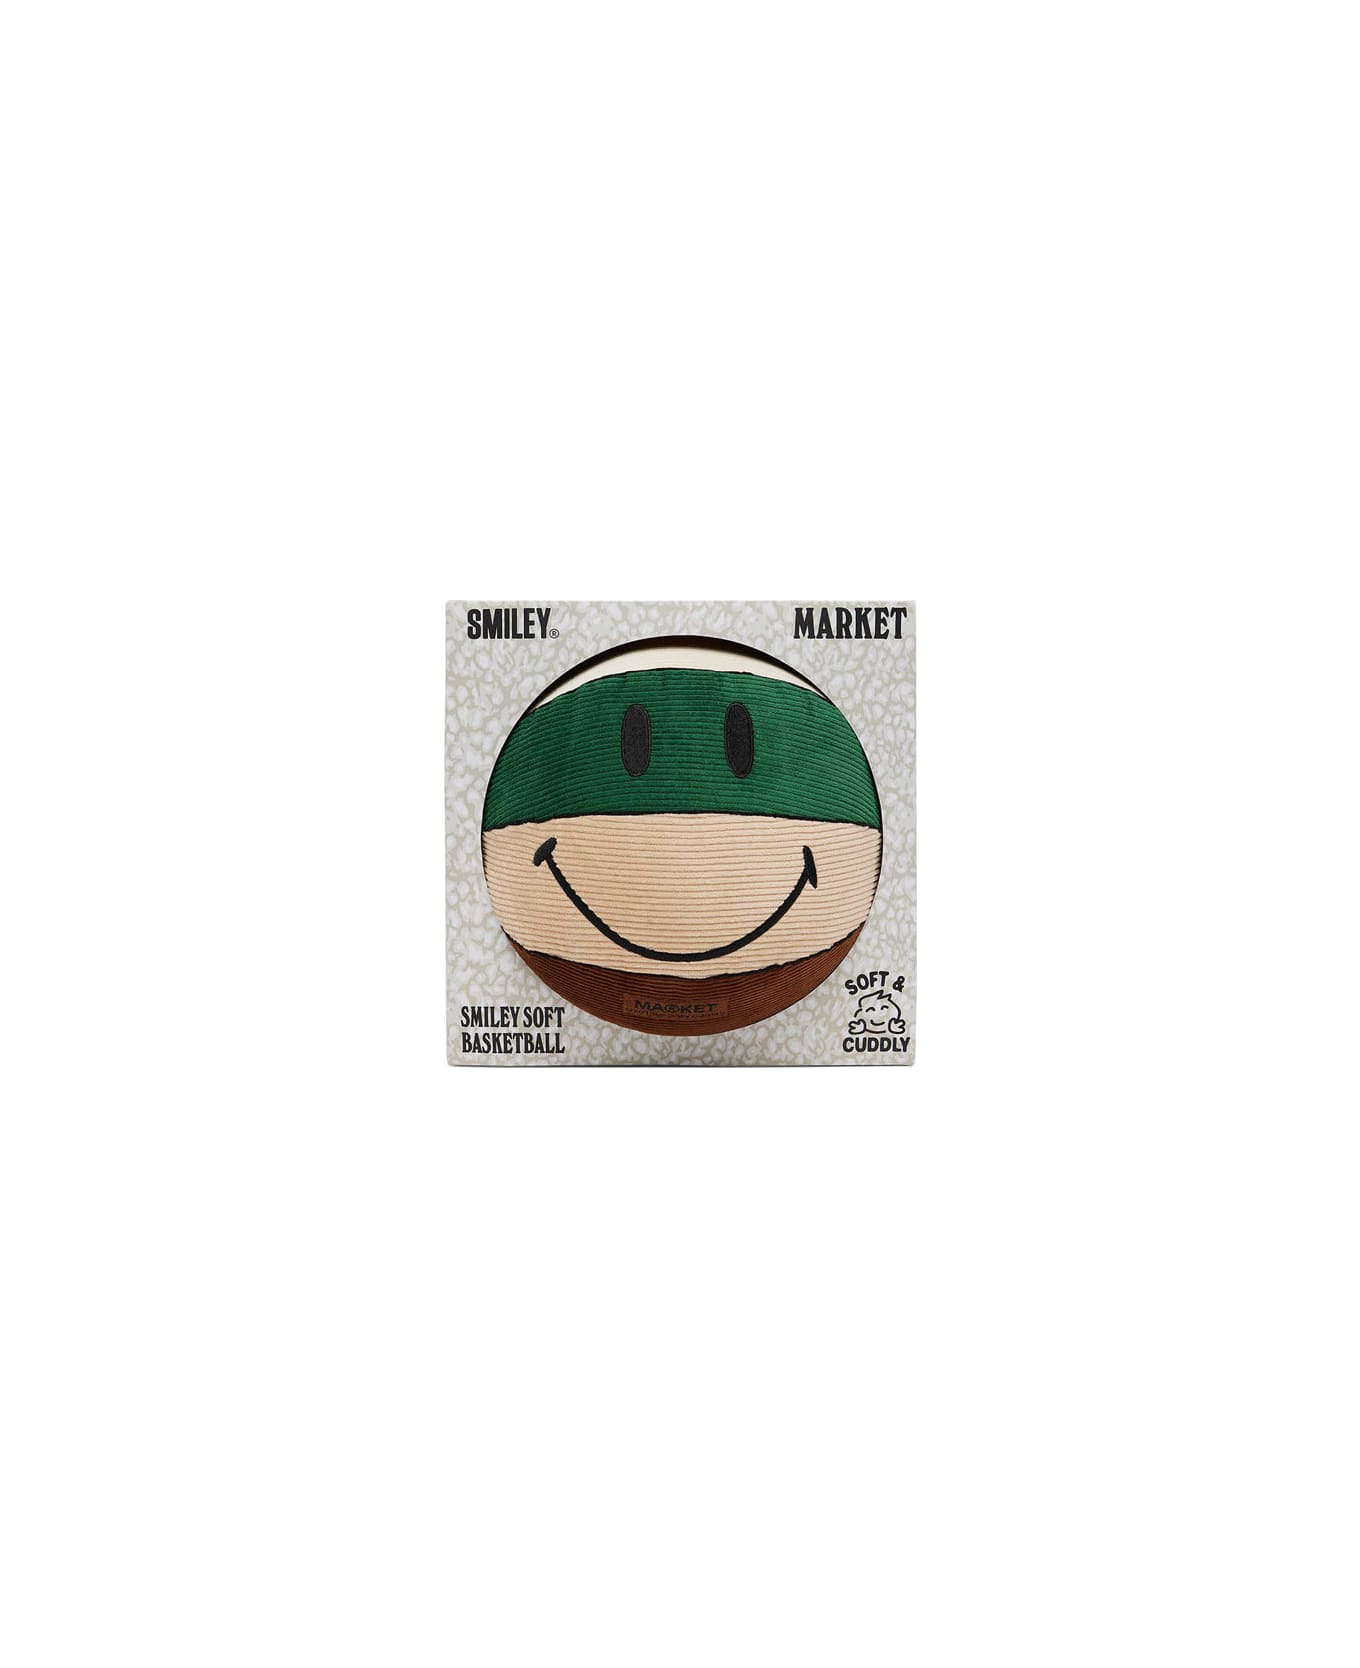 Market X Smiley Plush Basketball Ball - GREEN/NEUTRALS